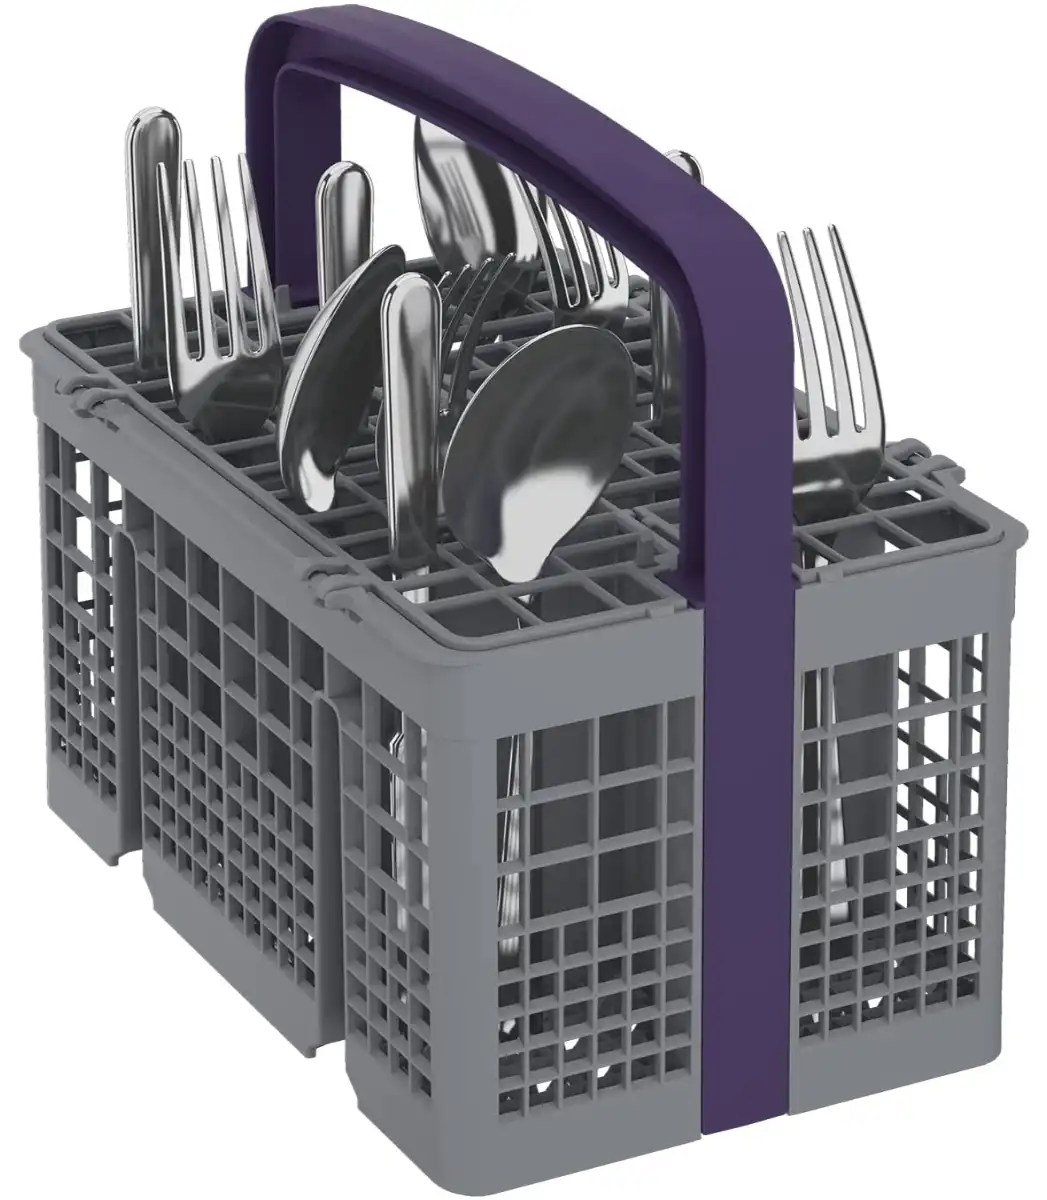 Beko Dishwasher 14 Place Settings, 60 cm, 5 Programs, Half Load, Intensive Clean, Steam Polishing, Silver, DFN15420S